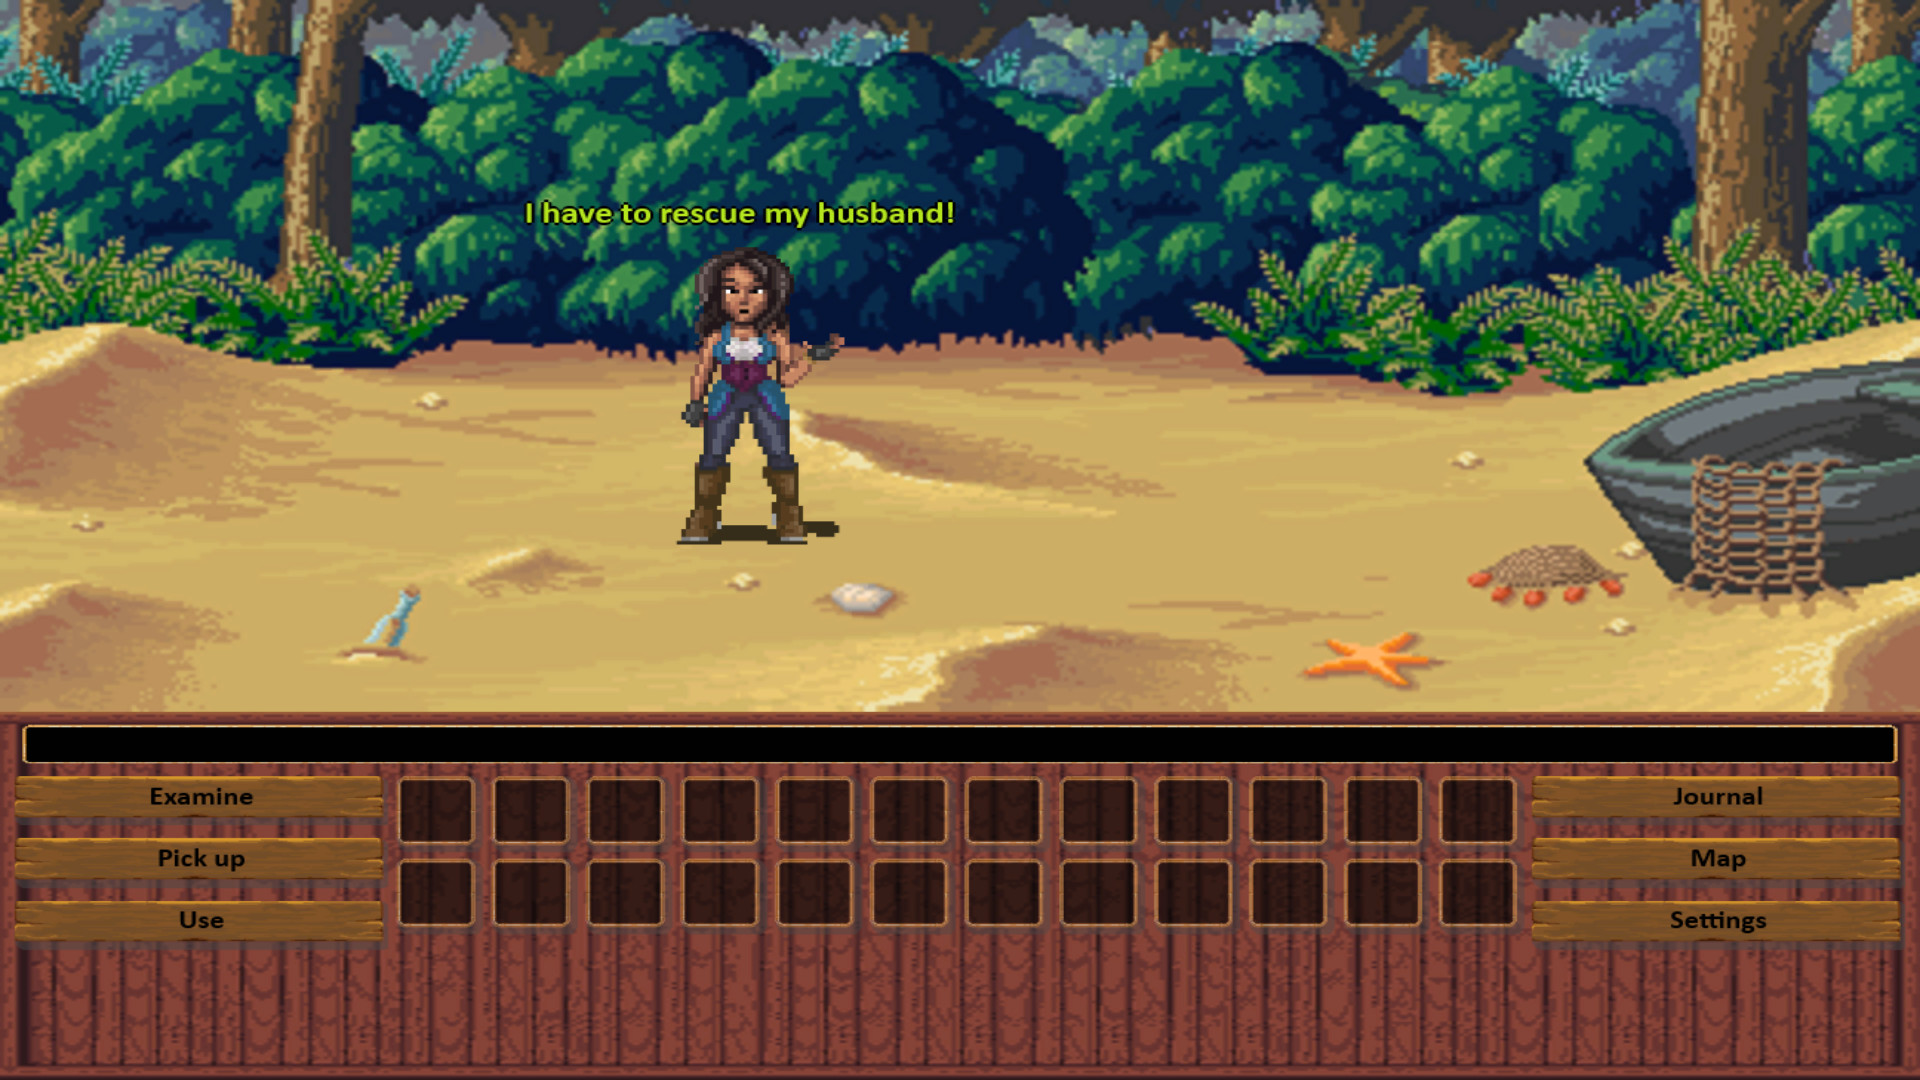 Monkeys & Dragons screenshot